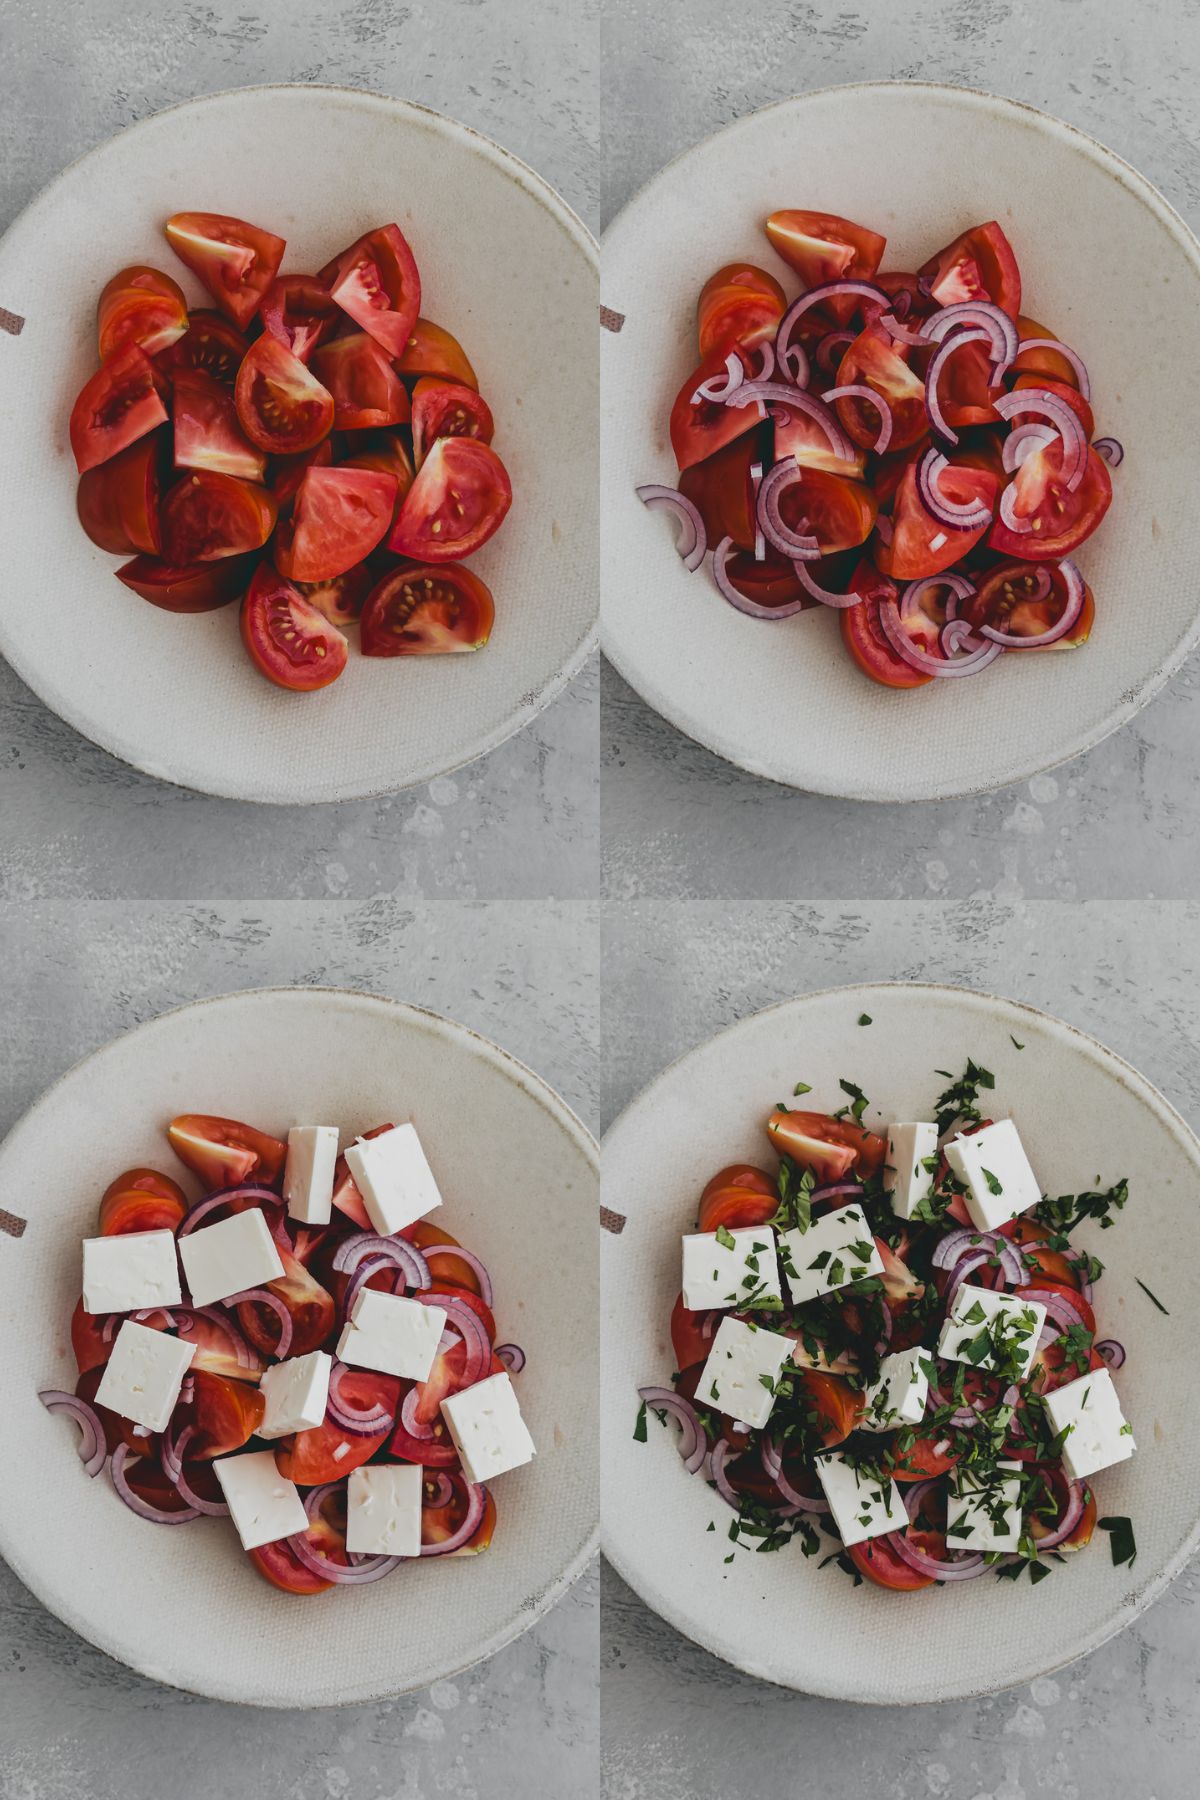 tomato feta salad recipe step 5-8